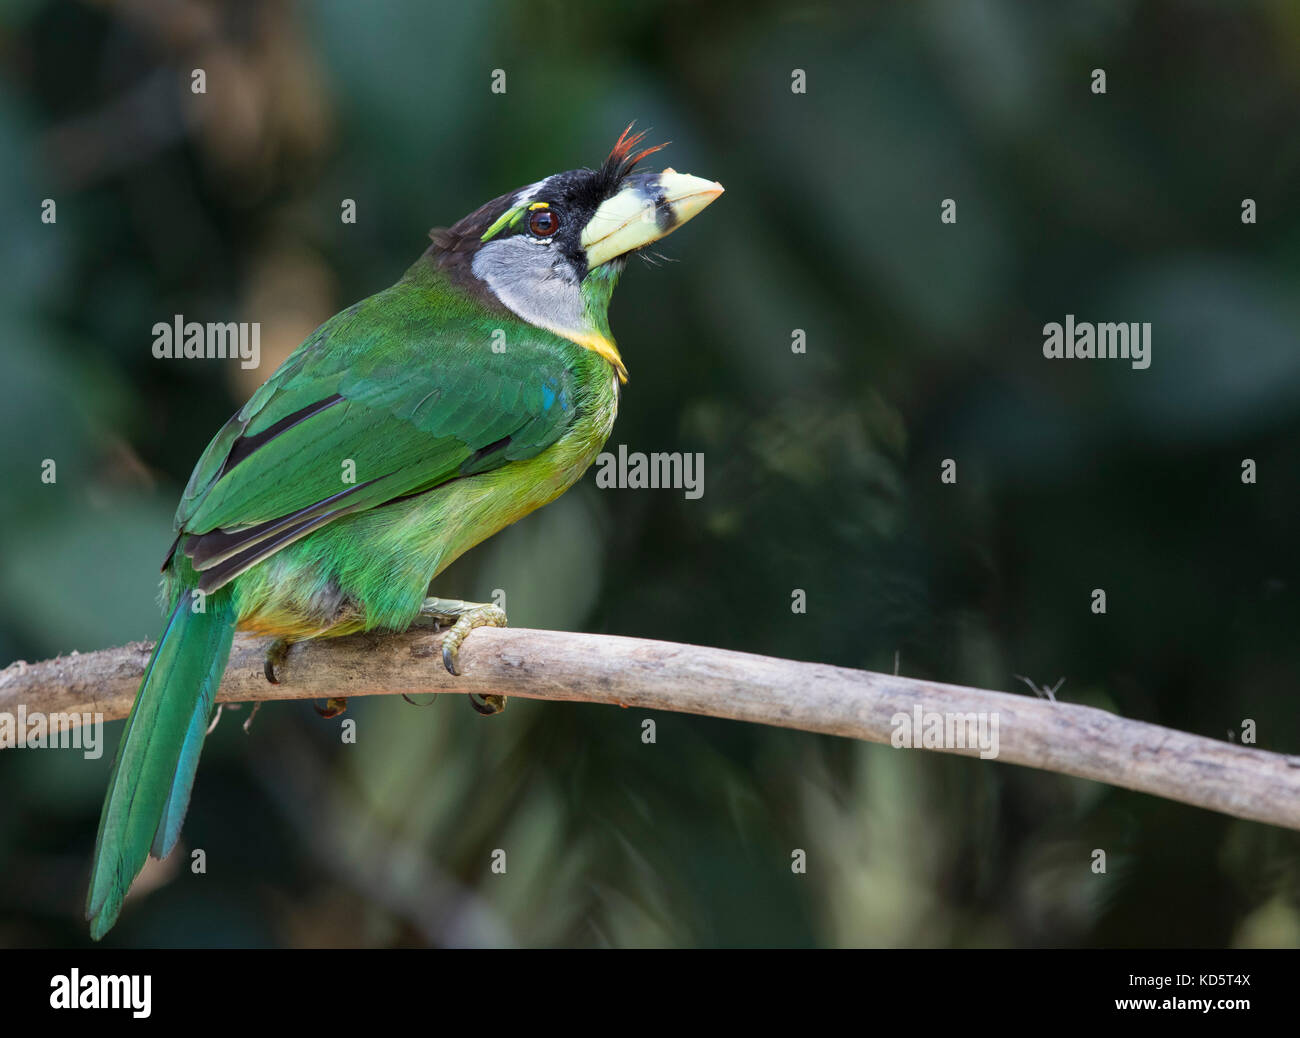 Colorful Birds in natural habitat Stock Photo